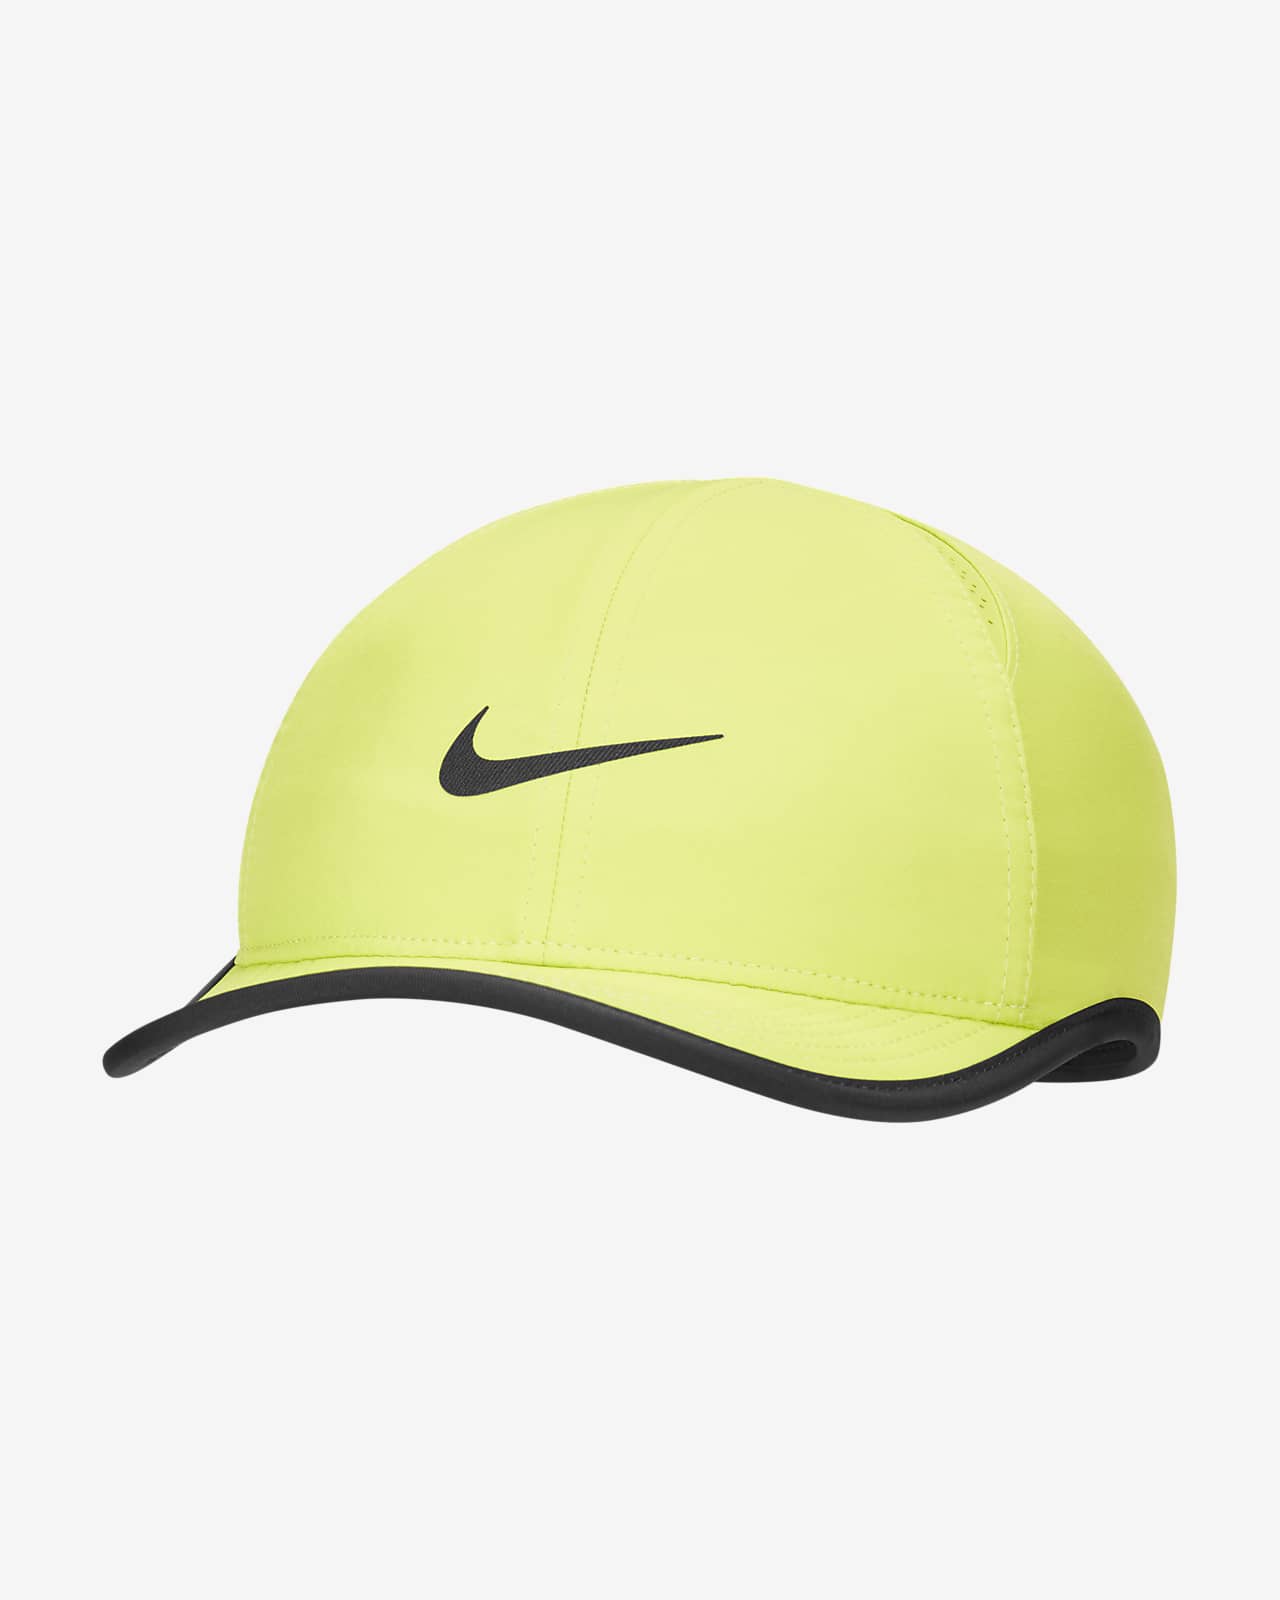 Nike, Accessories, Nike Featherlight Cap